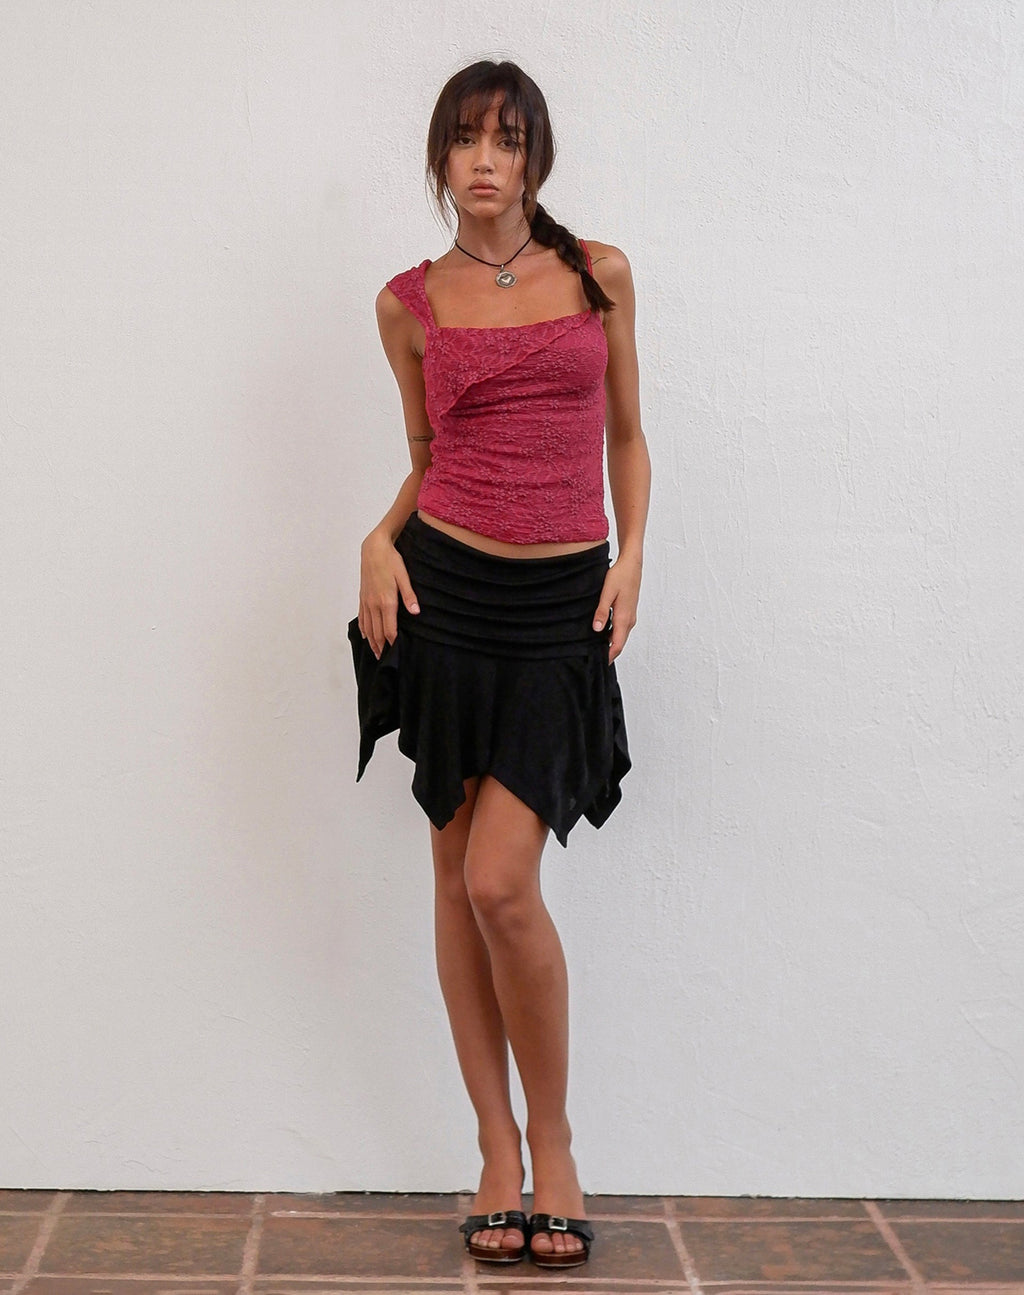 Tasdi Low Waist Slinky Mini Skirt in Black